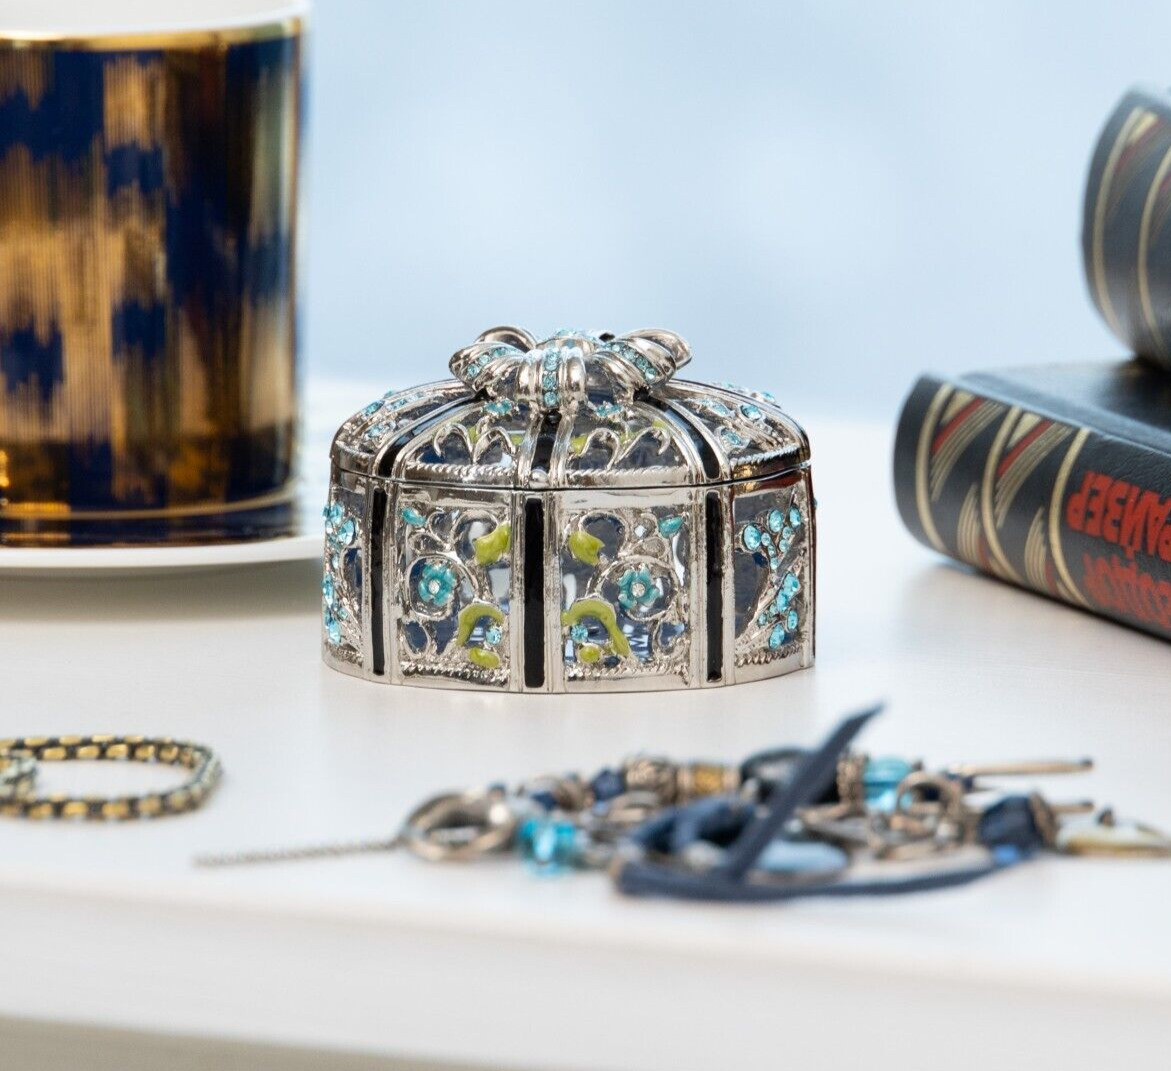 Keren Kopal  Blue Trinket Box silver plate Decorated with Austrian Crystals